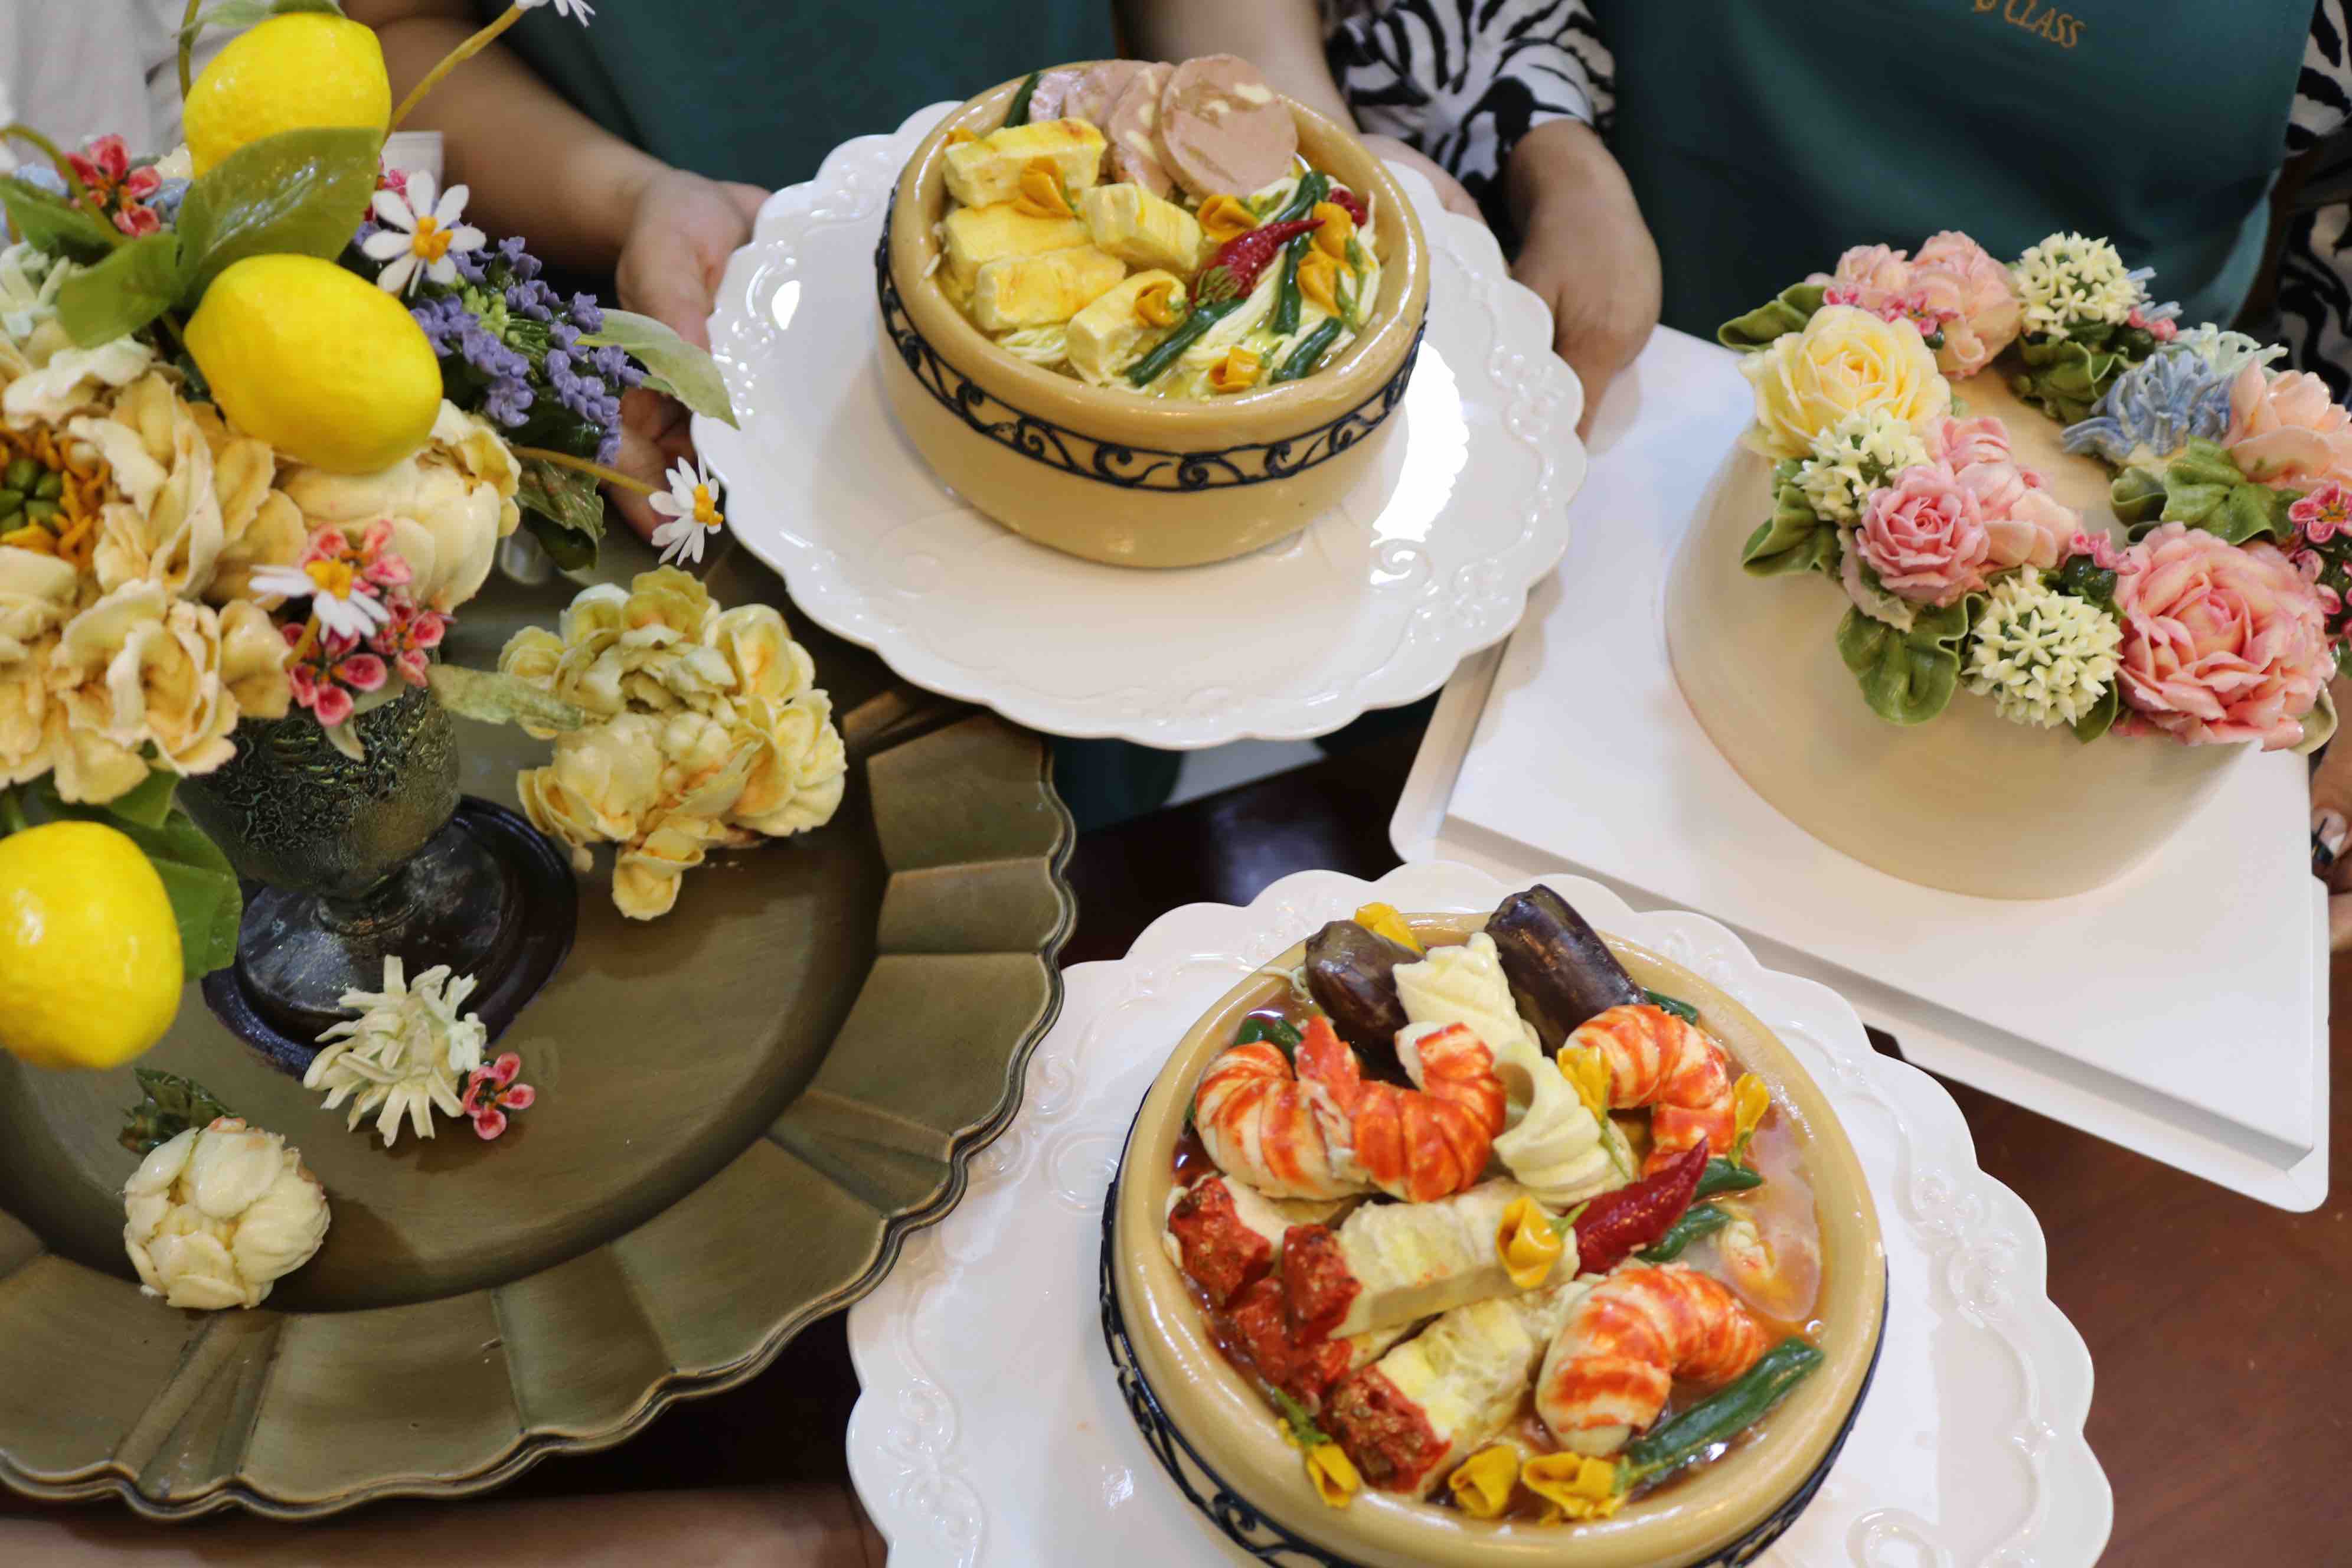 Lam Ngoc Tran's Vietnam-inspired cakes. Photo: Hoang An / Tuoi Tre